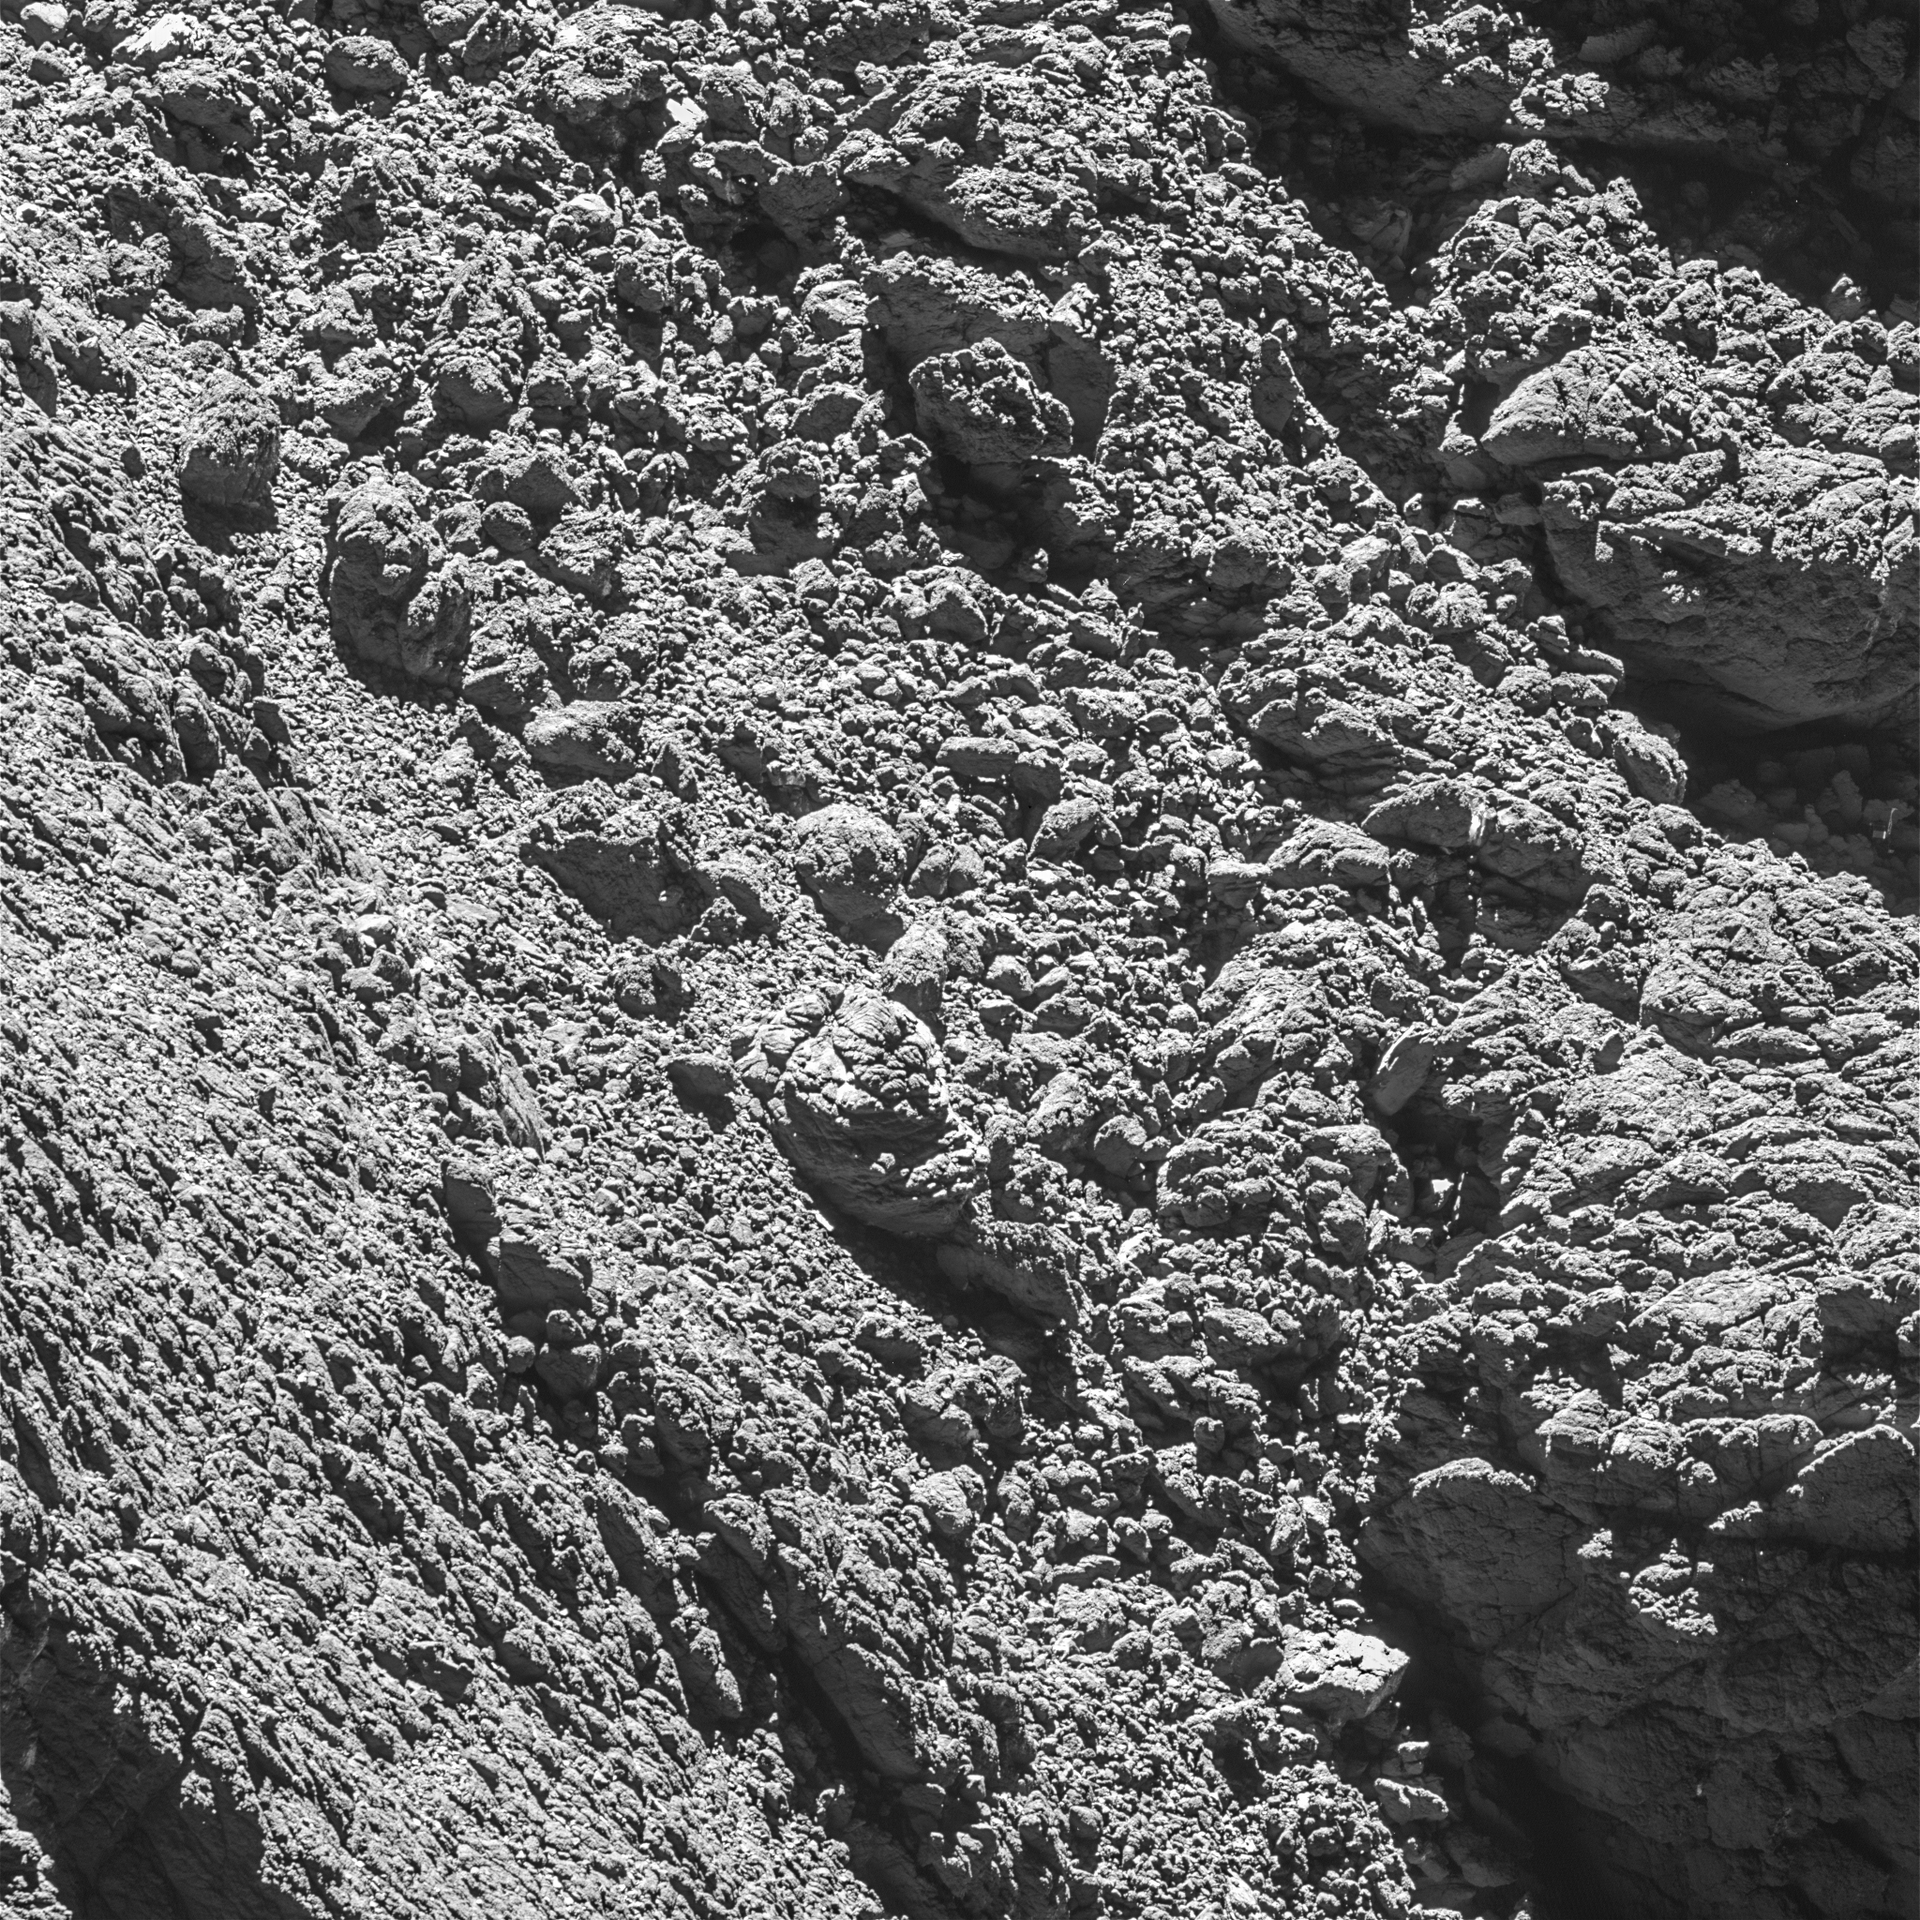 OSIRIS narrow-angle camera image with Philae, 2 September 